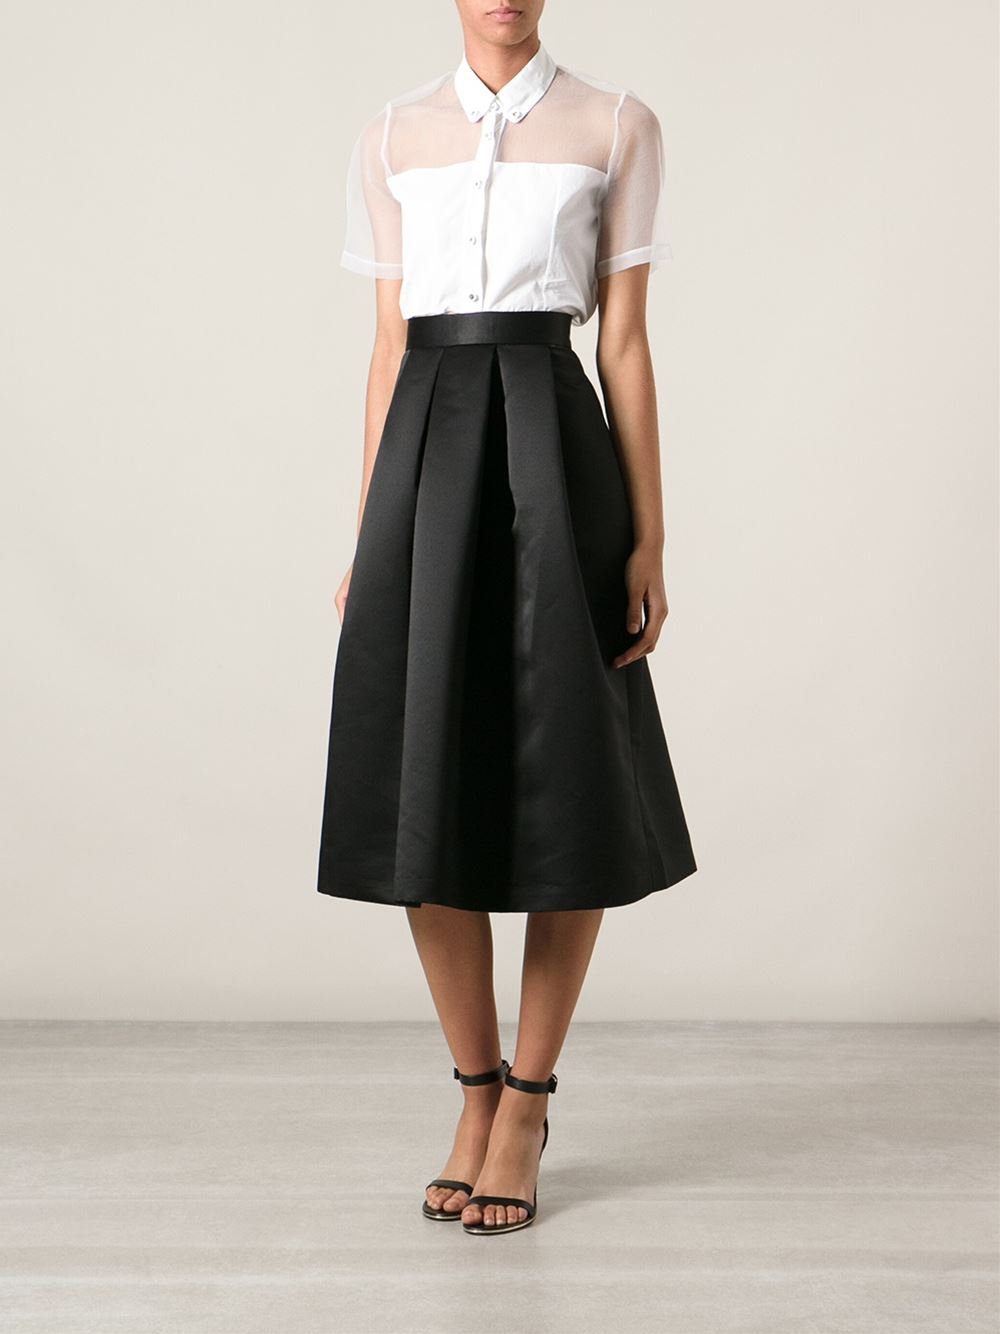 Crisp White Shirt  Black Box Pleat Midi  Pleated skirt outfit White pleated  skirt Dressy skirts